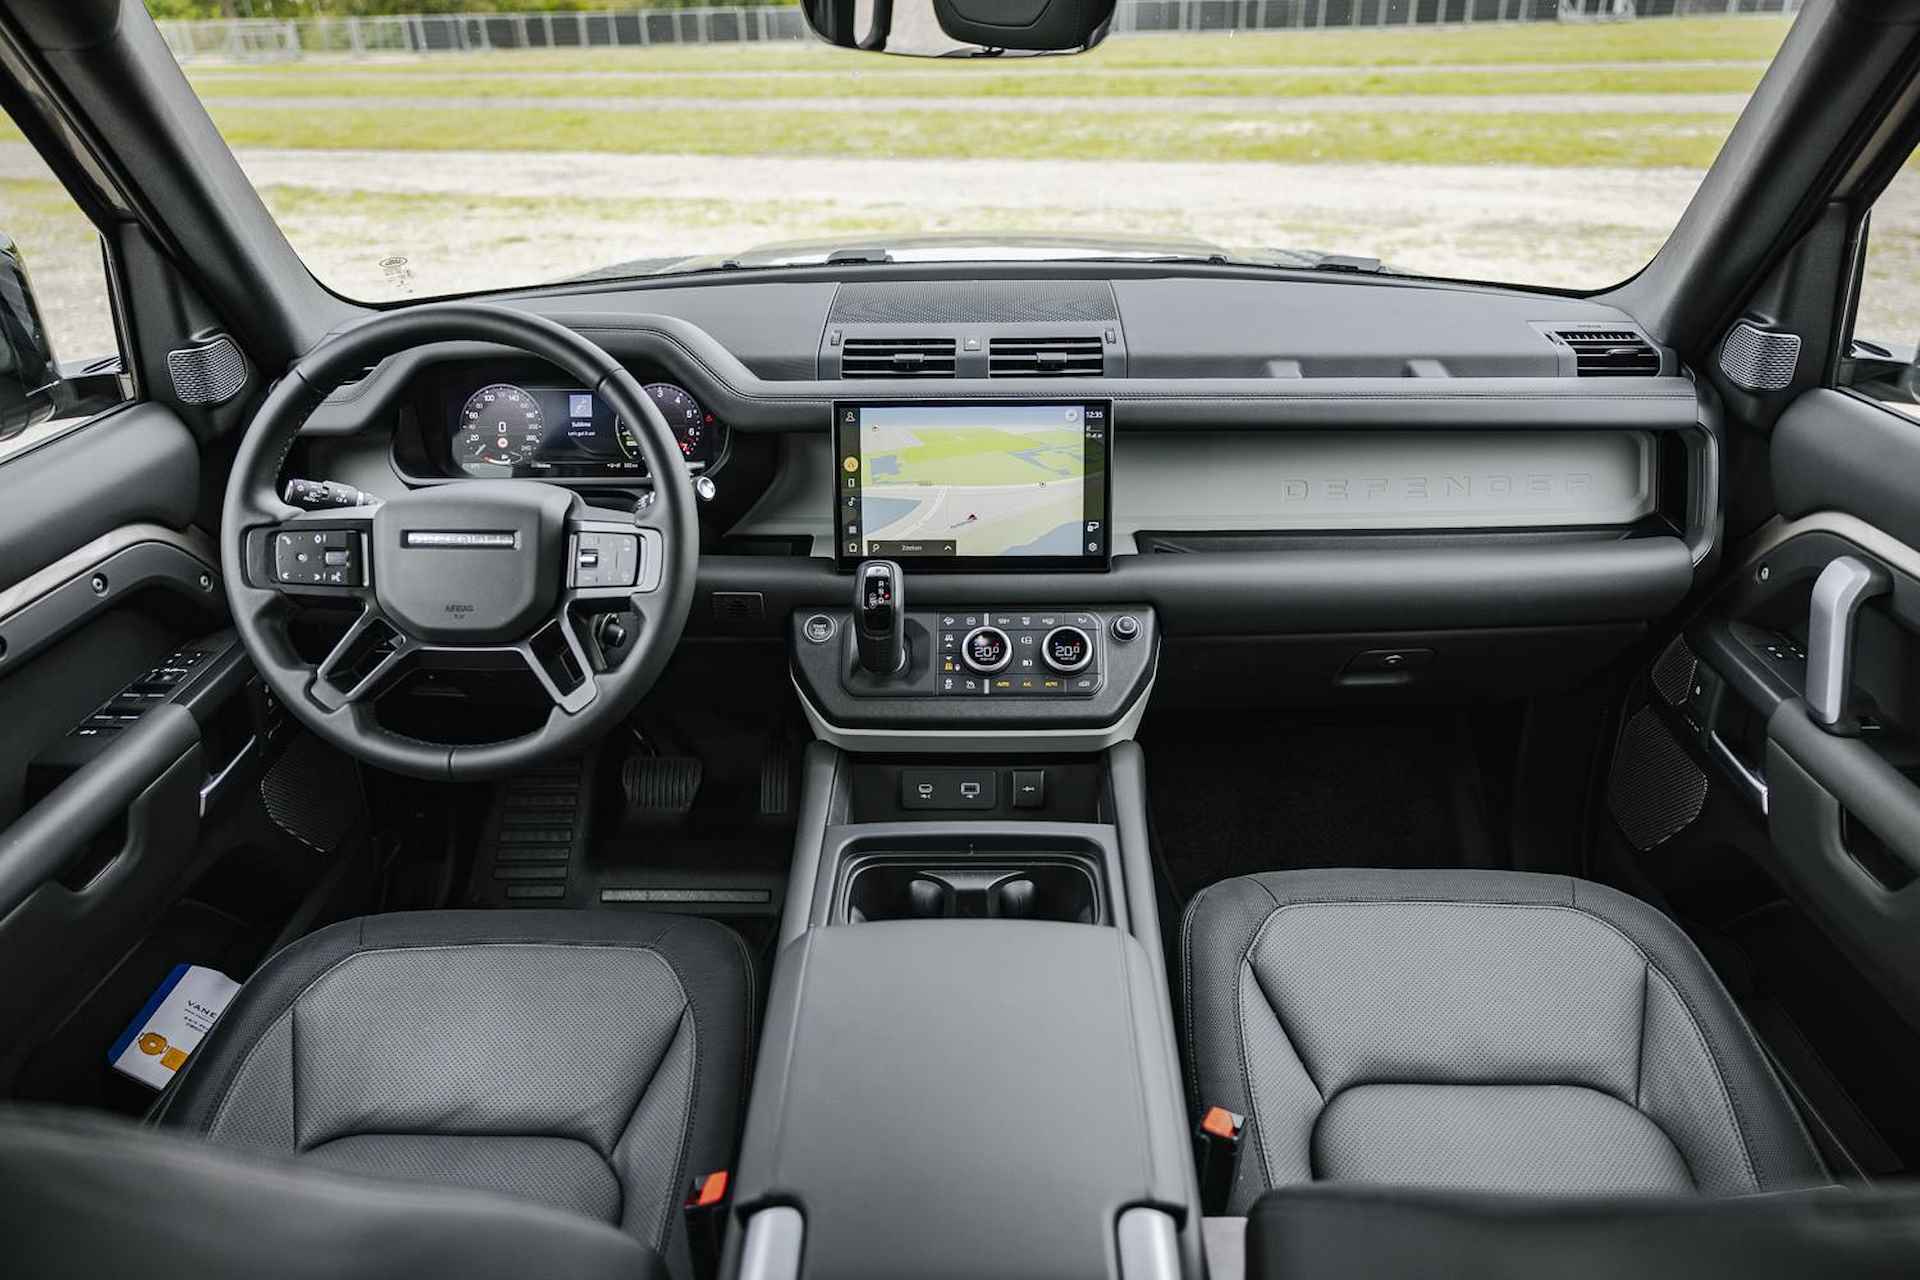 Land Rover Defender 2.0 P400e 110 X-Dynamic HSE | Panoramadak | 22" Velgen in Gloss Black | 11,4" Touch Screen | Cold Climate Pack | Elektrische Trekhaak | Expedition imperiaal | Uitklapbare Dakladder| All Season Banden - 21/43